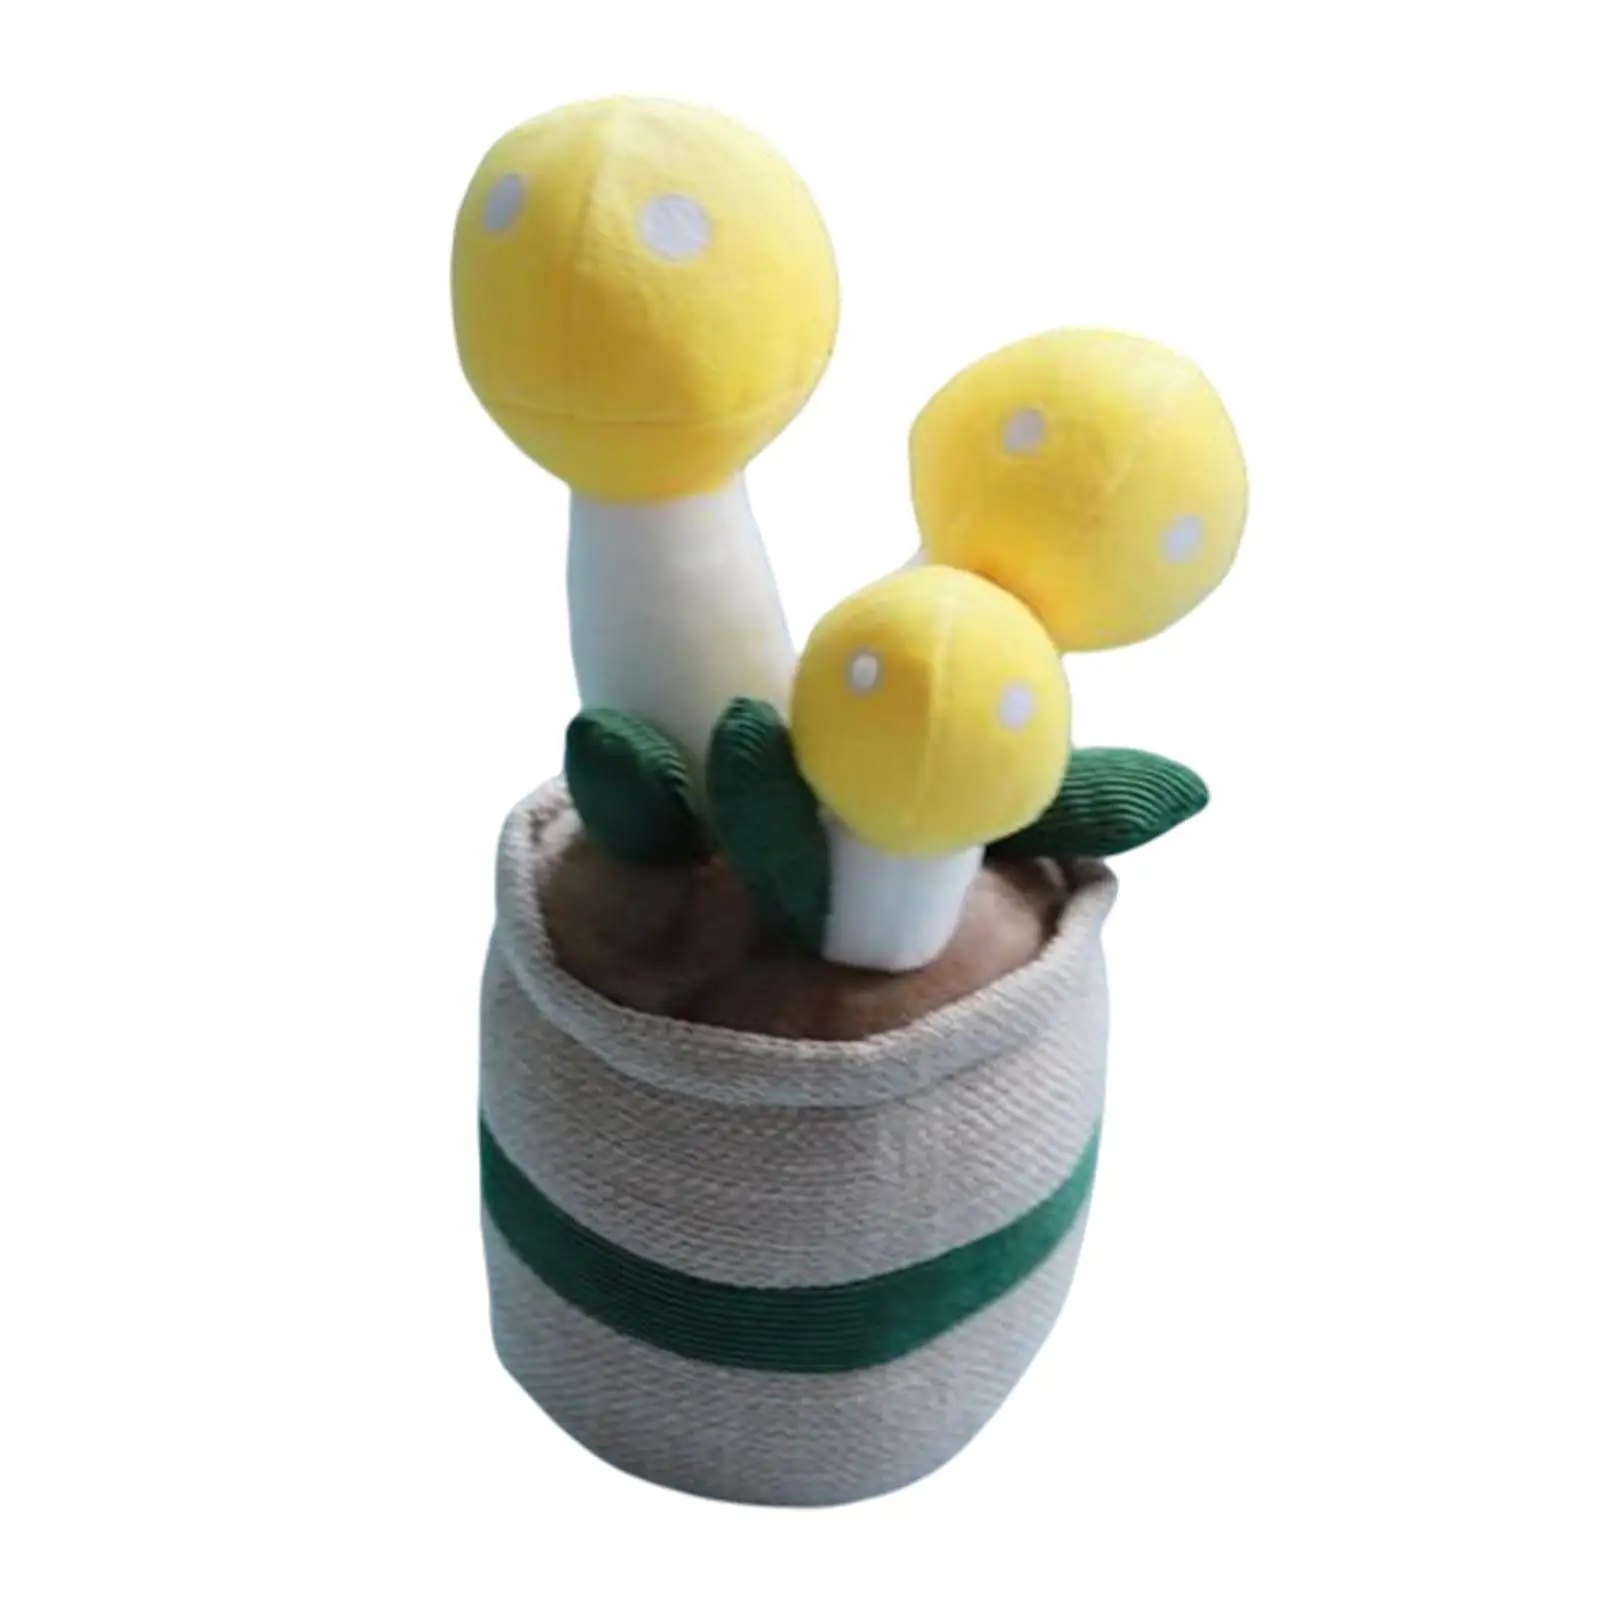 Mushroom Plush Toys Creative for Bedside Table Indoor Bookshelf Decor Living Room